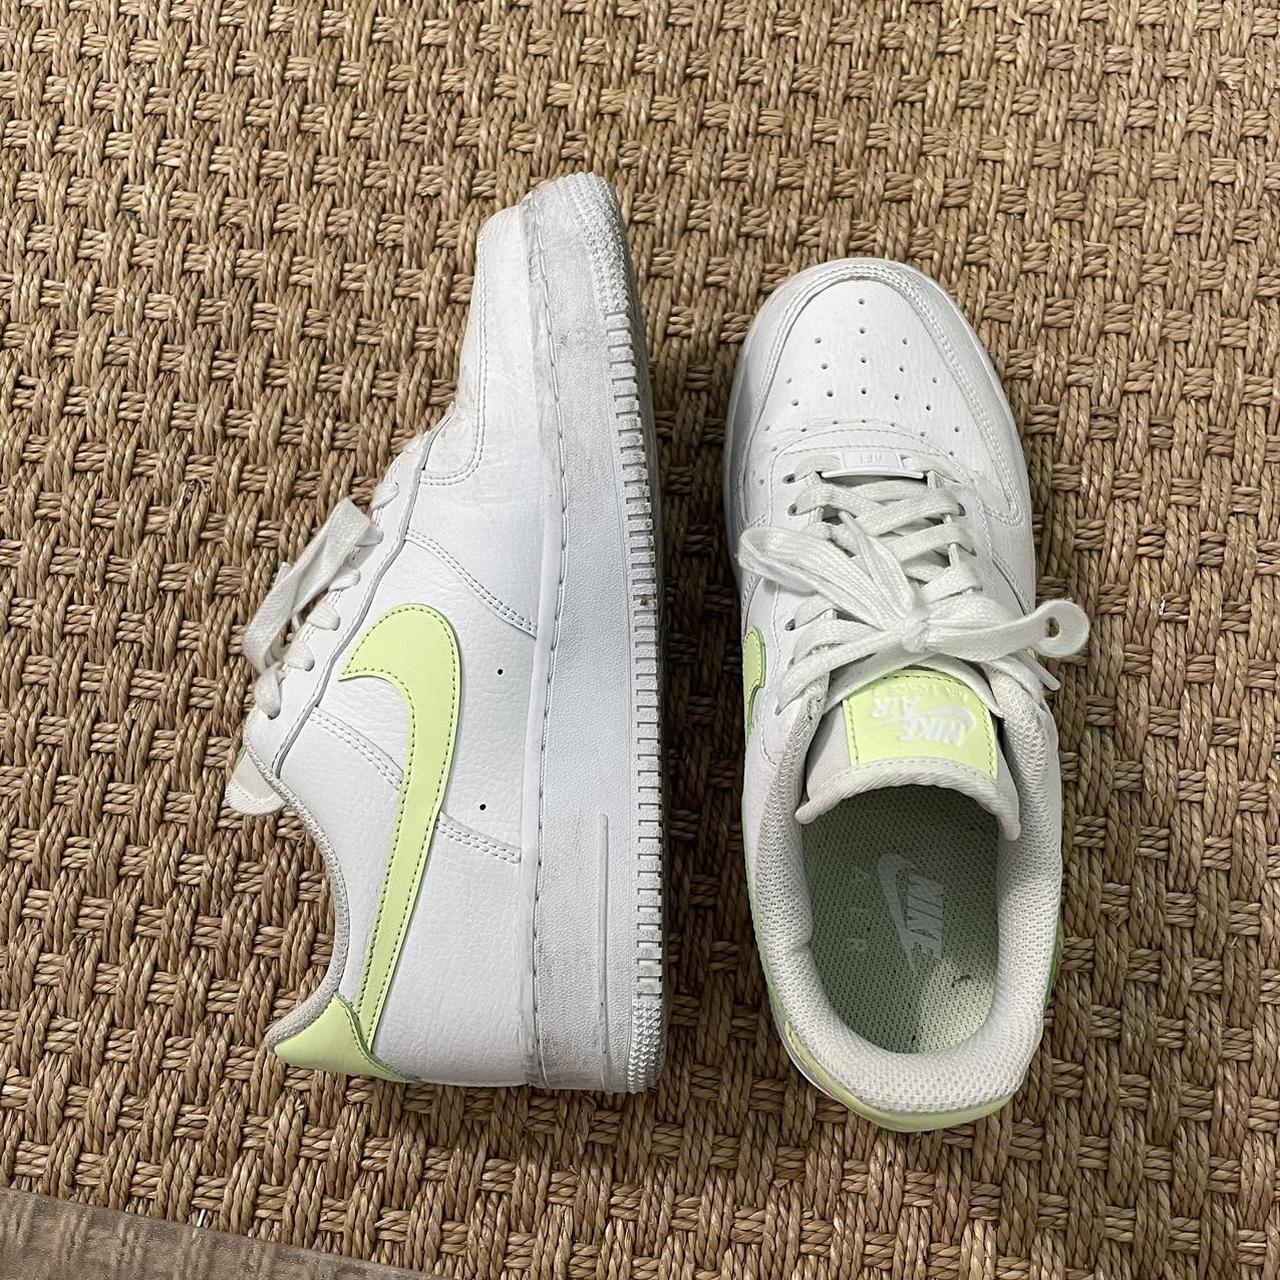 Nike Air Force 1 sneaker Beautiful neon green, - Depop